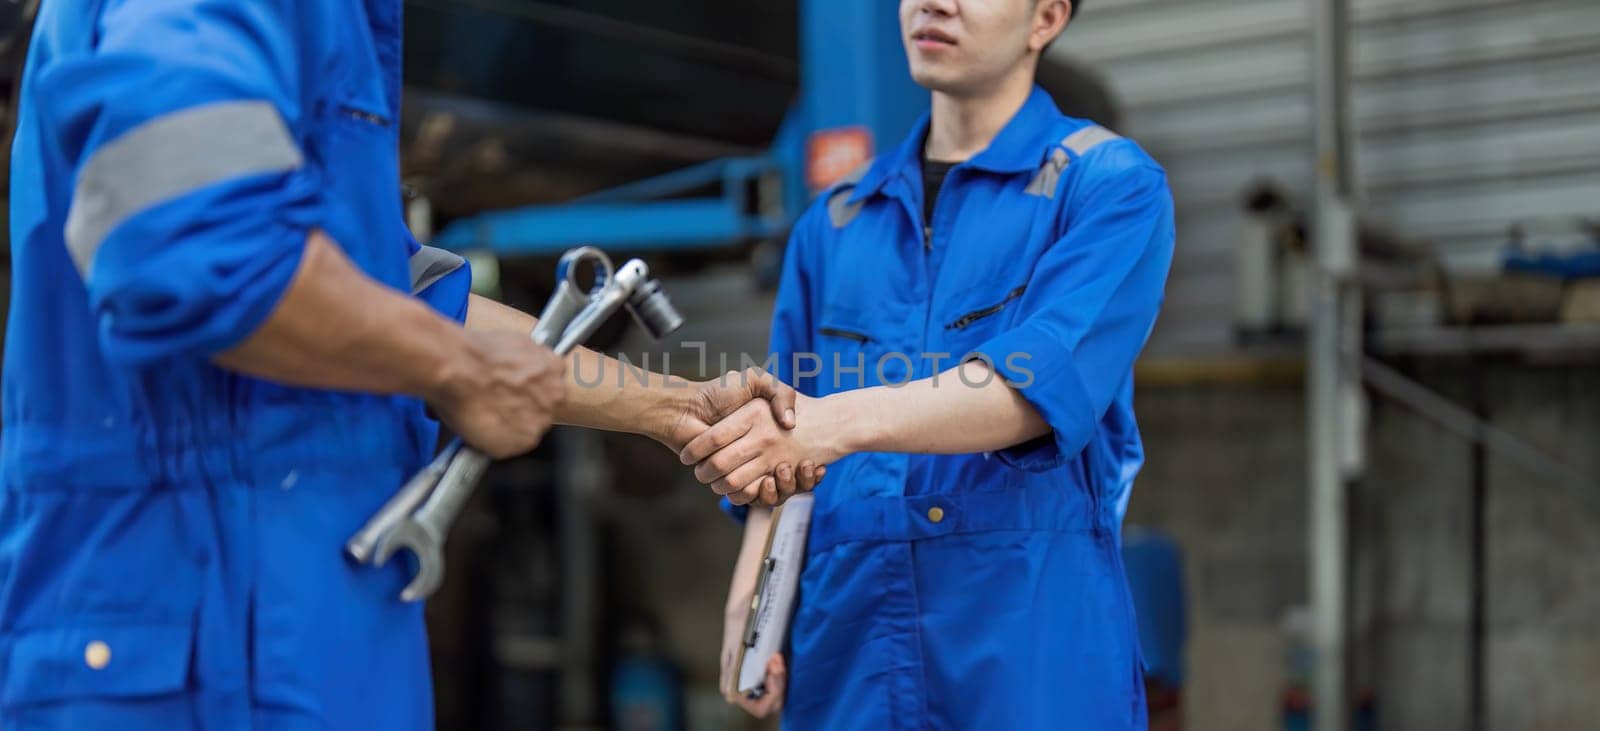 Two car mechanic team shaking hand at automobile service center. Repair service concept. Car repair and maintenance. Car mechanic working at automotive team service center..